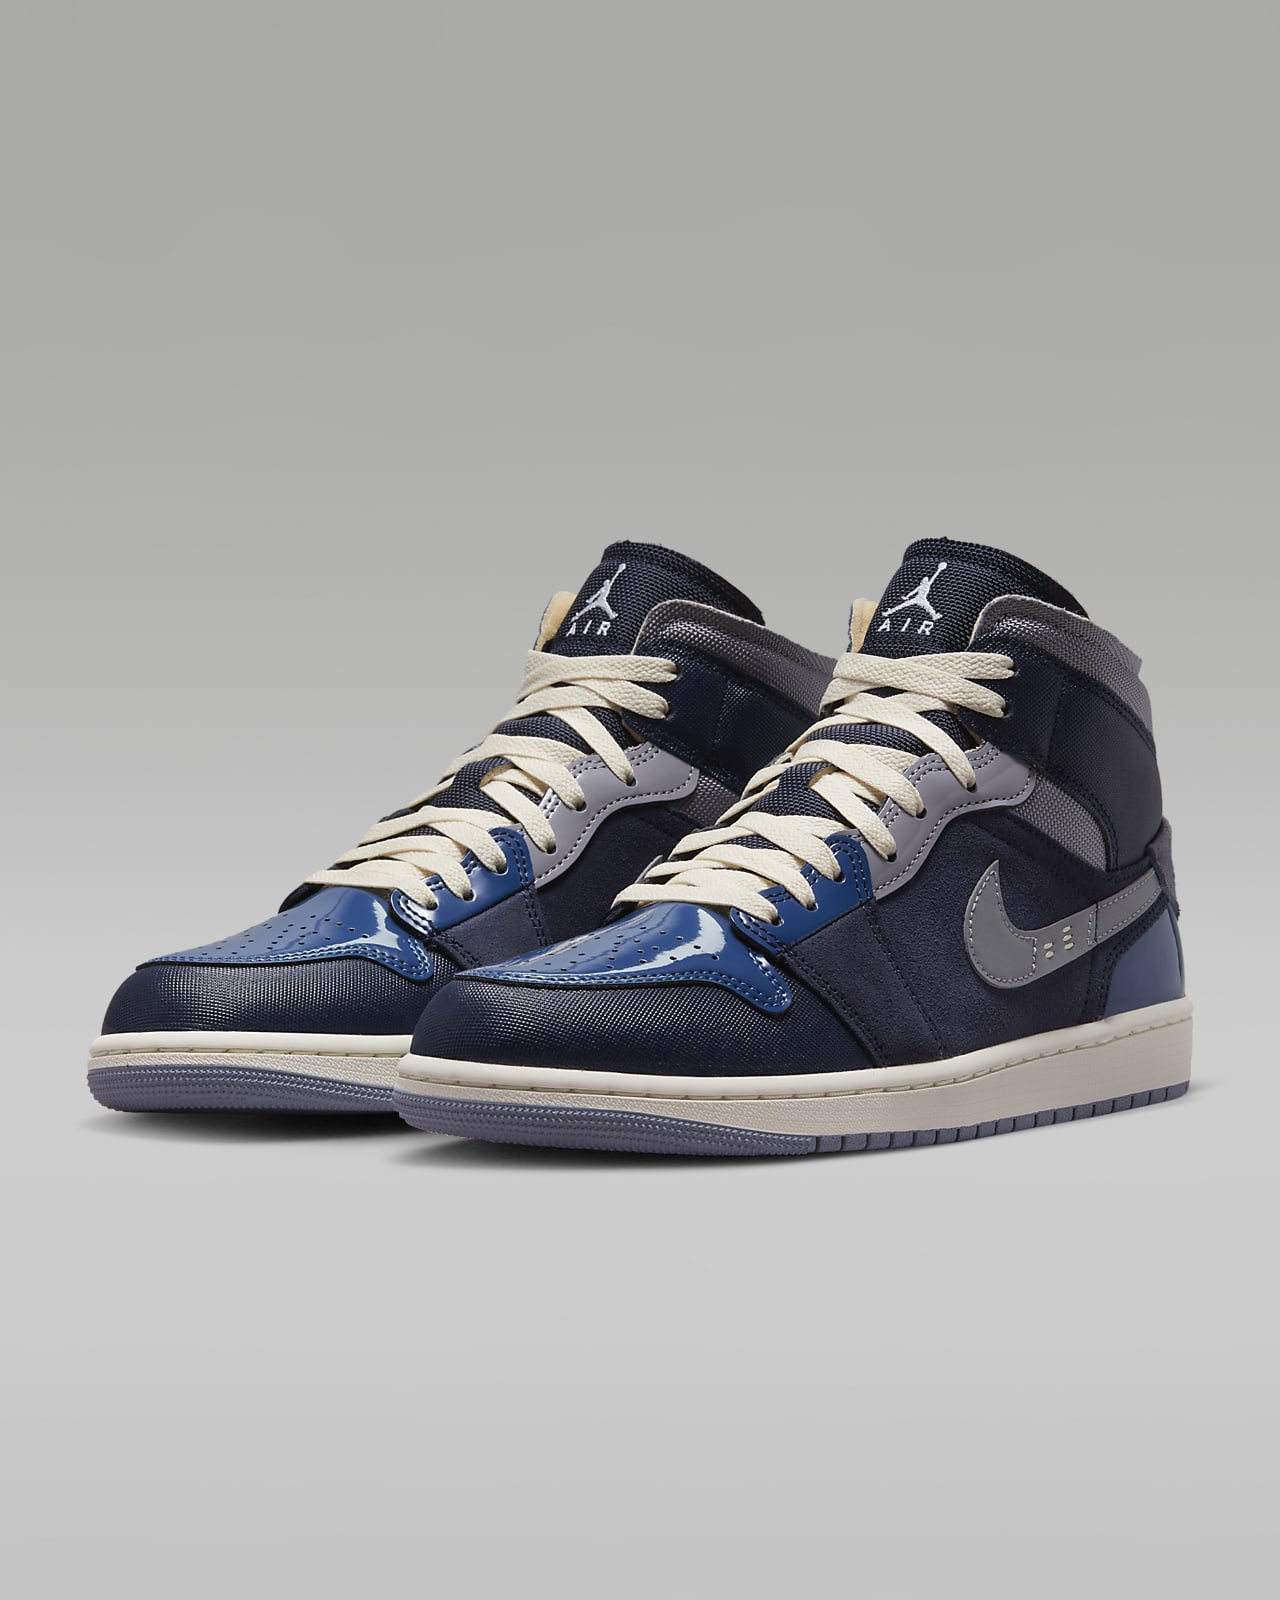 Nike Air Jordan 1 Mid Sneakers in Blue & Gray